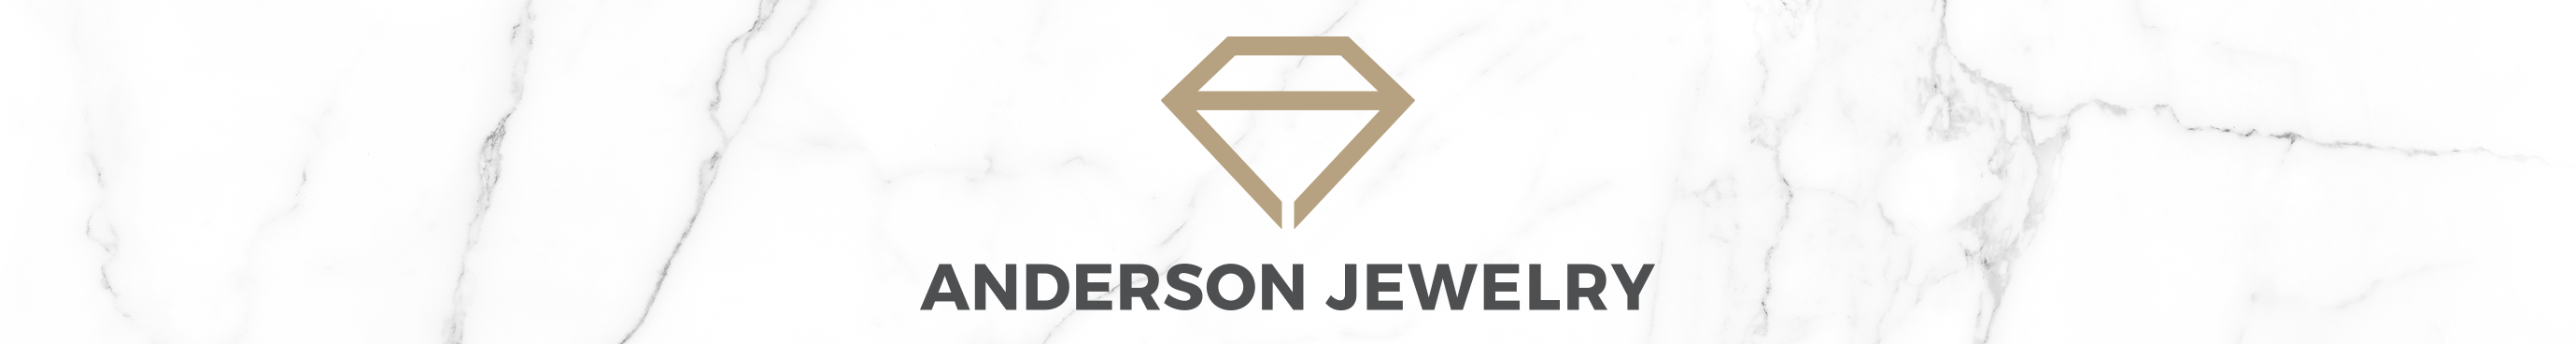 Anderson Jewelry Logo